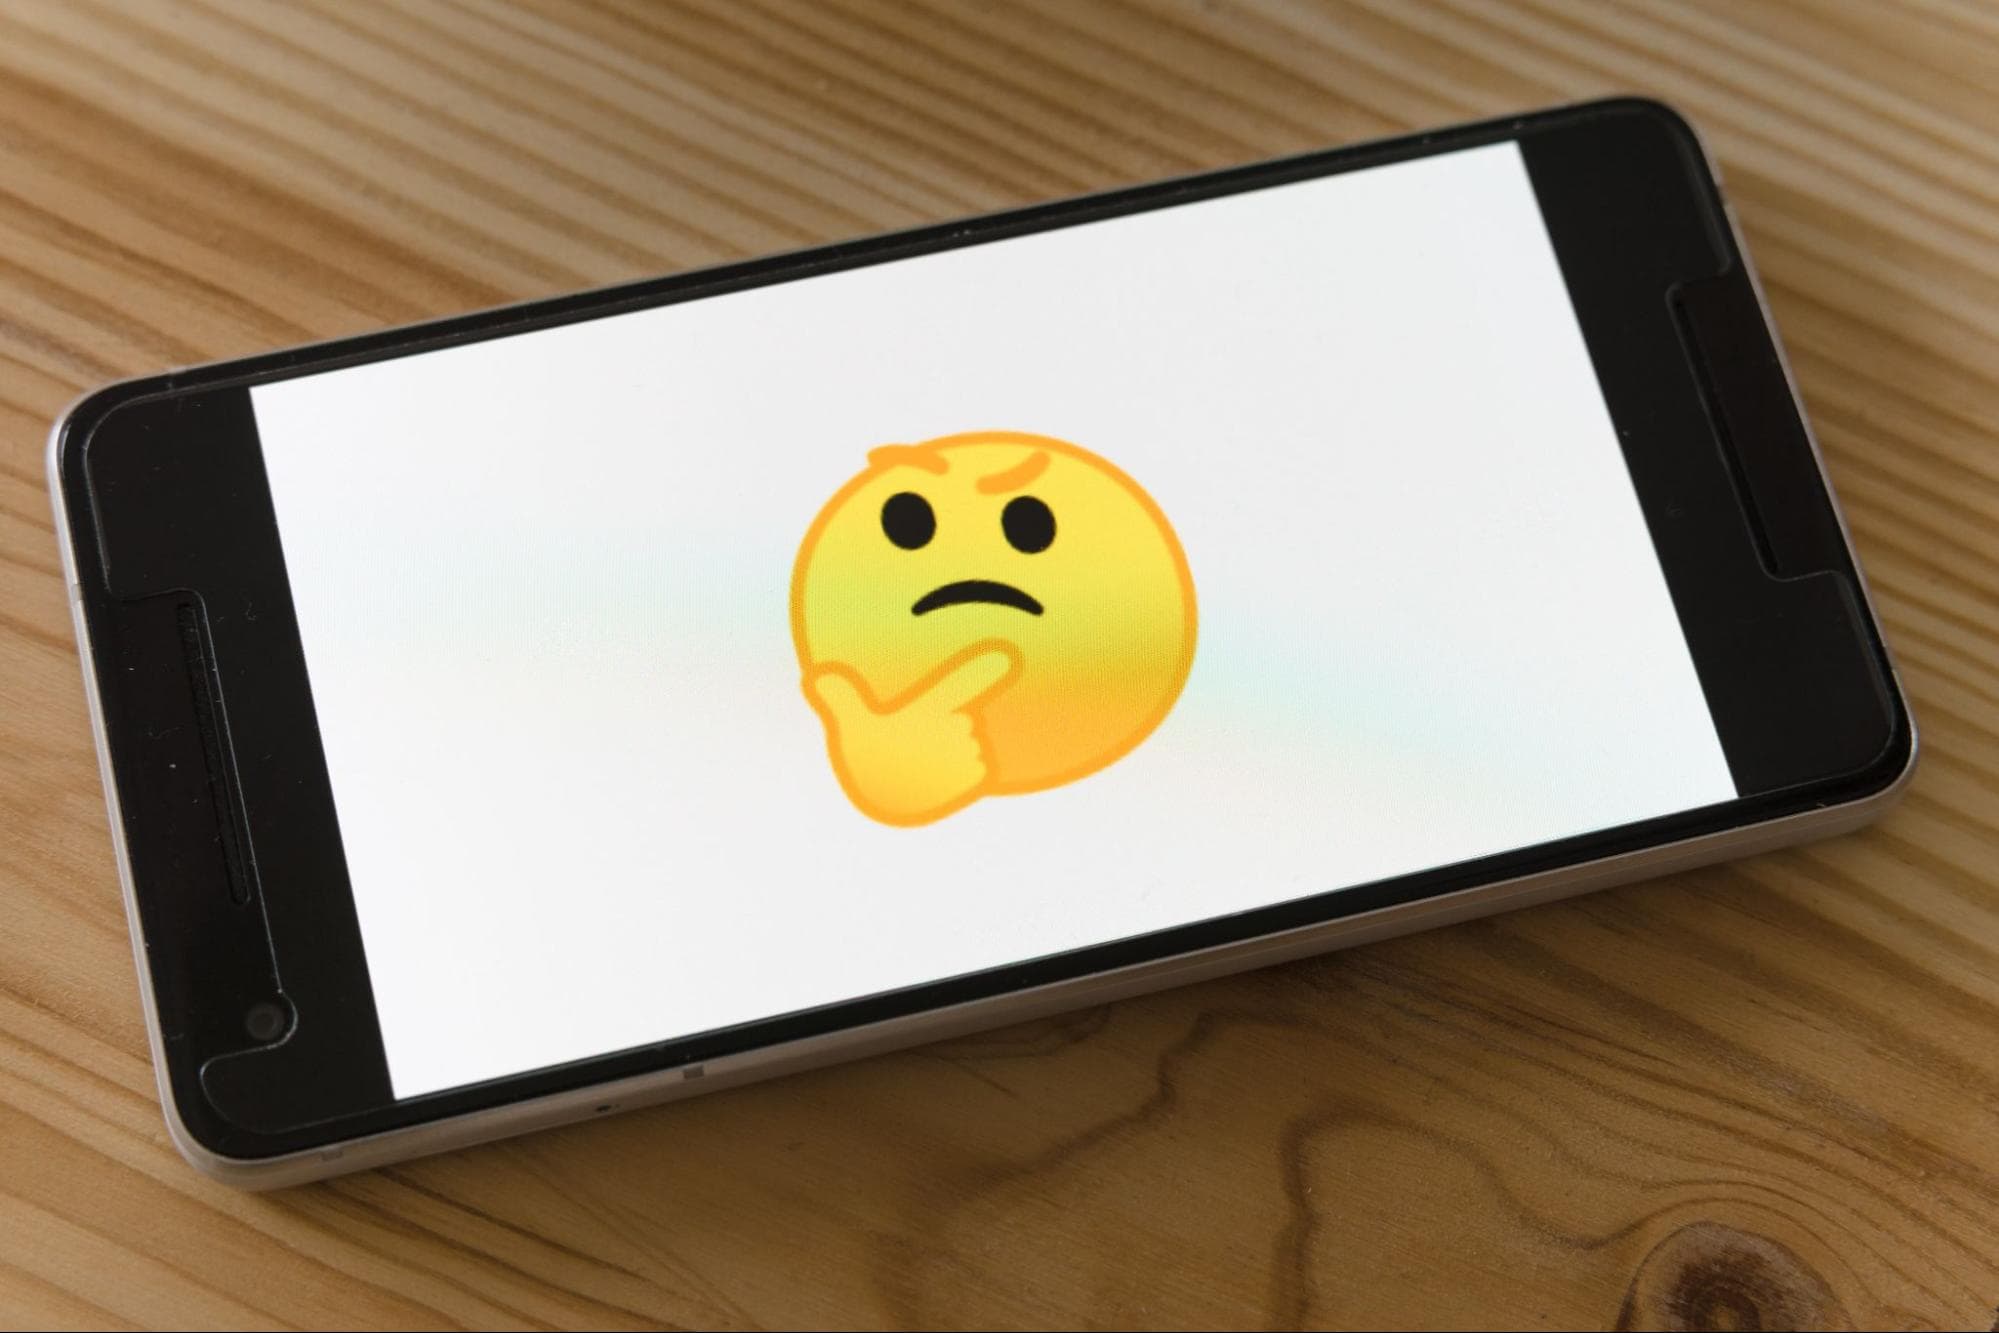 Thinking emoji face on mobile phone